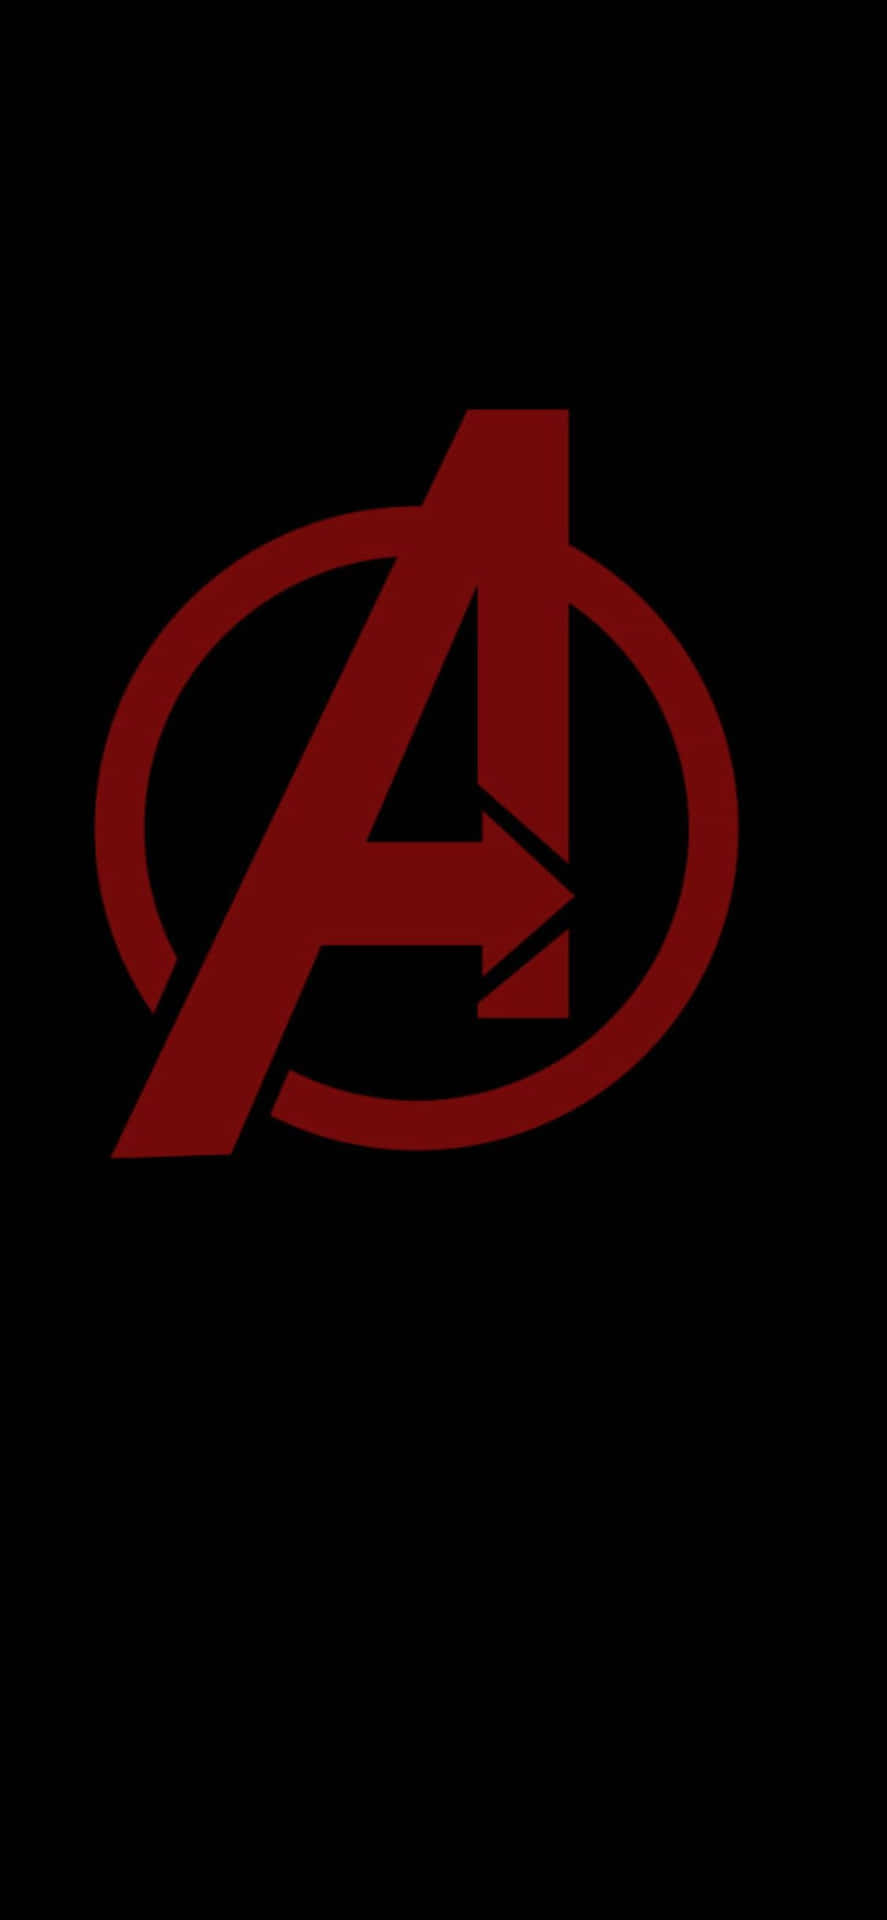 Mørk minimalistisk iPhone XS Avengers logo baggrund